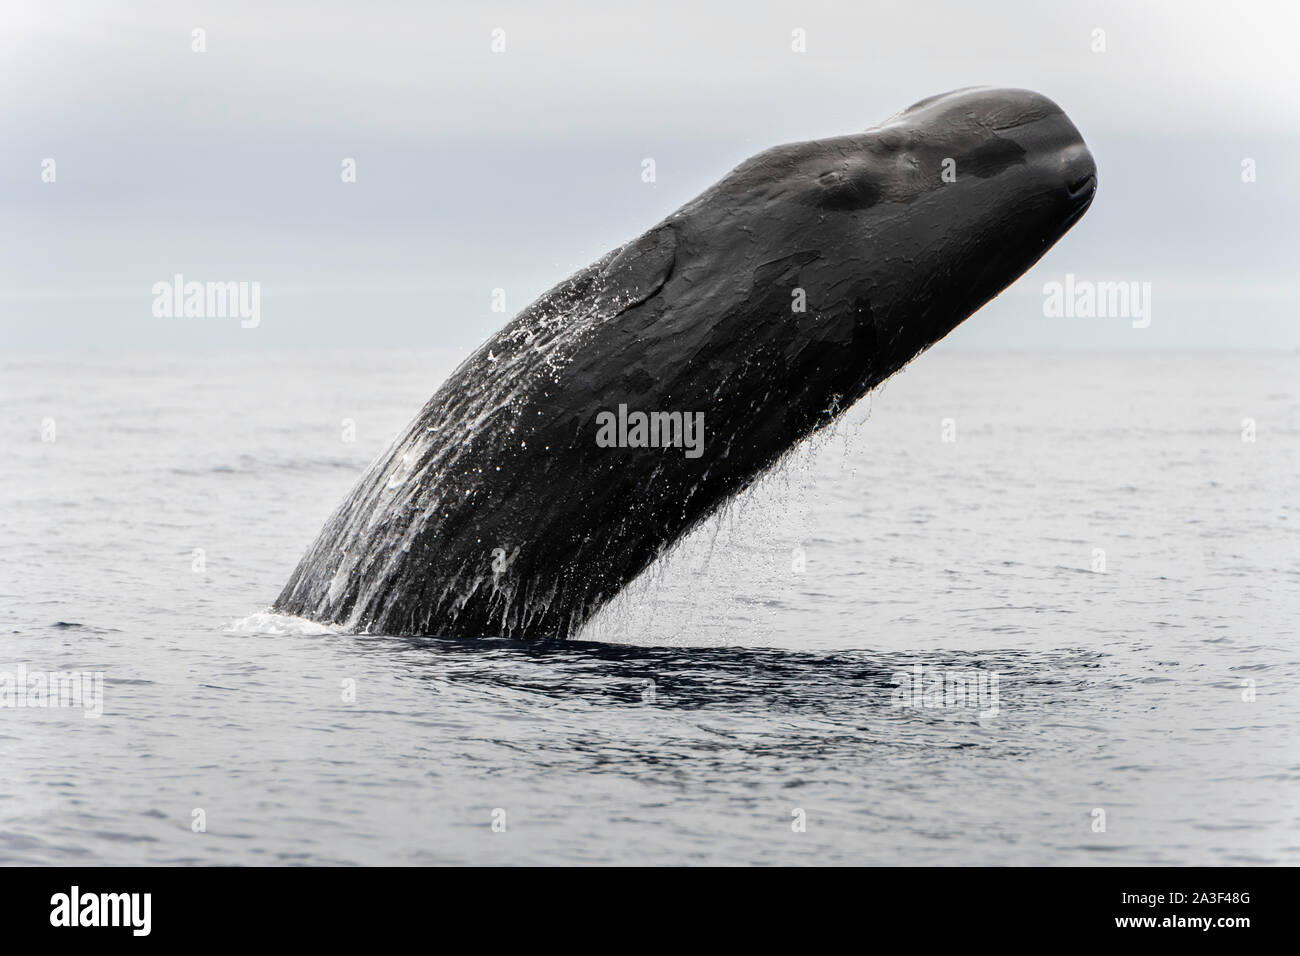 Sperm whale breaching, Atlantic Ocean, Pico Island, The Azores. Stock Photo